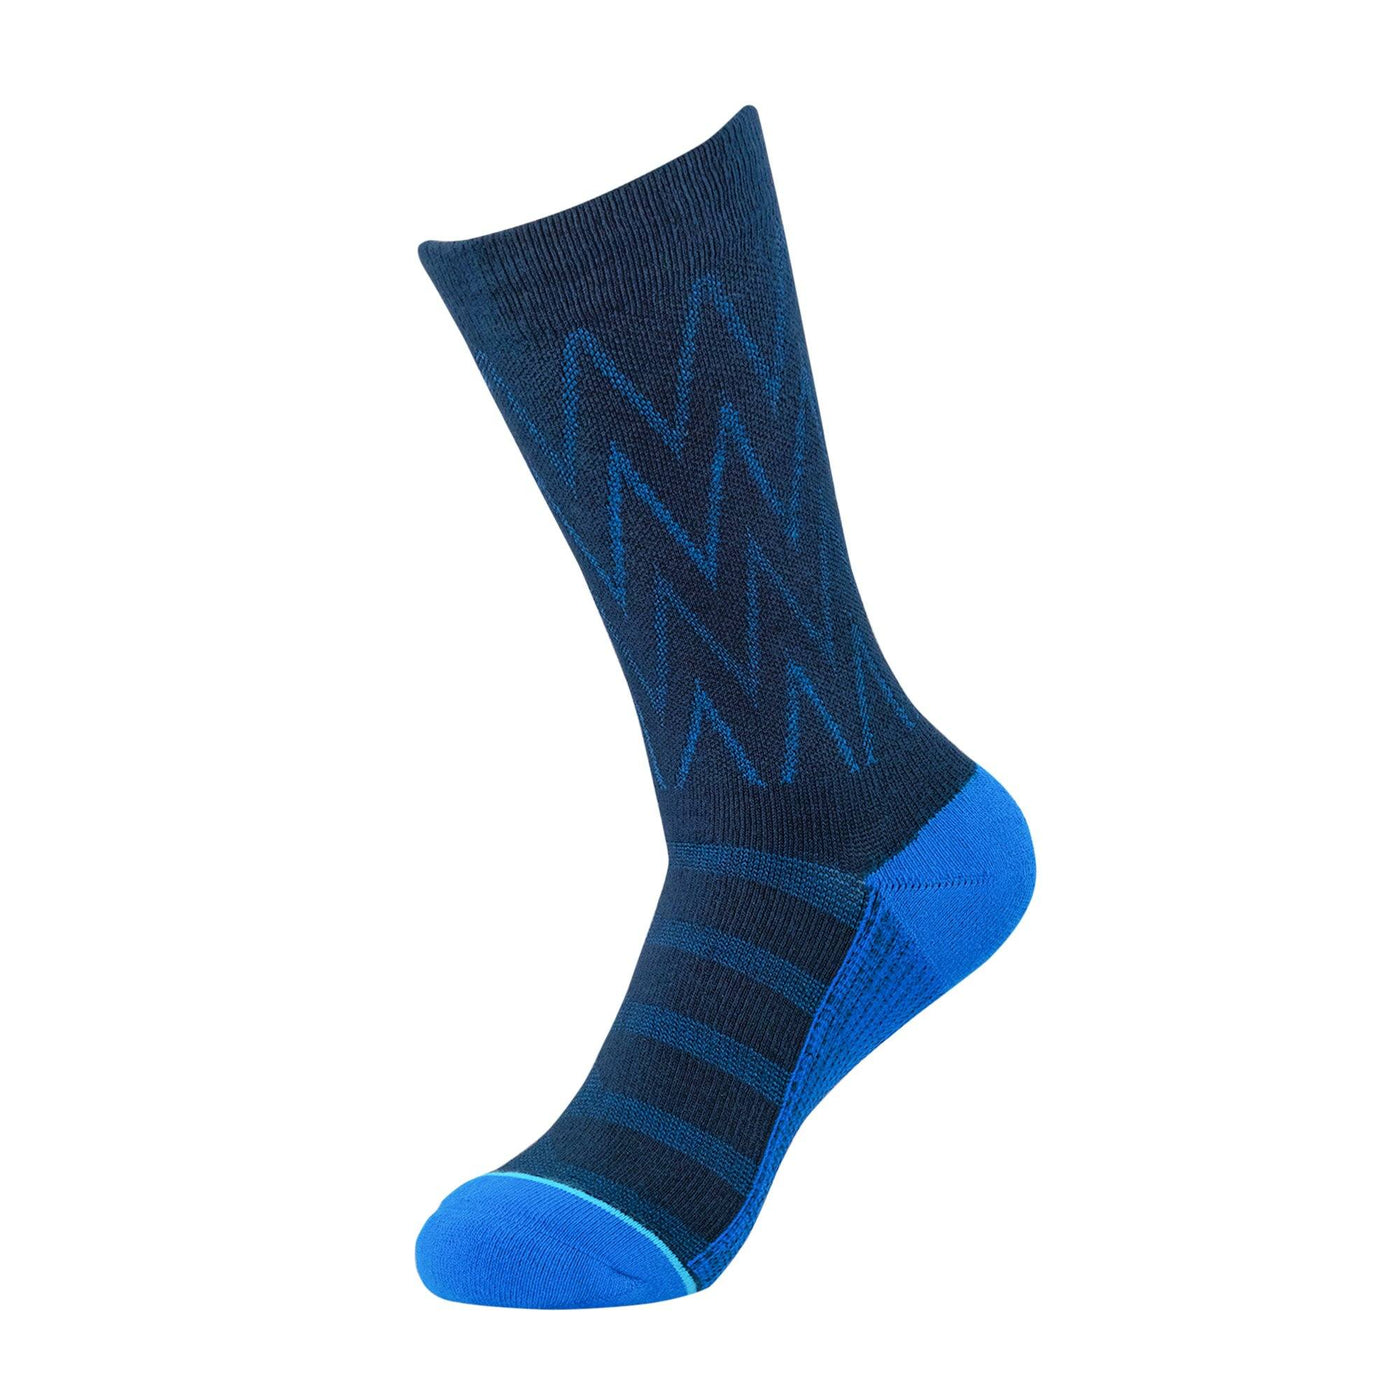 Dark/Royal Blue Herringbone Dress Sock dress socks ArchTek Women's Medium (sizes 8-10.5) Blue